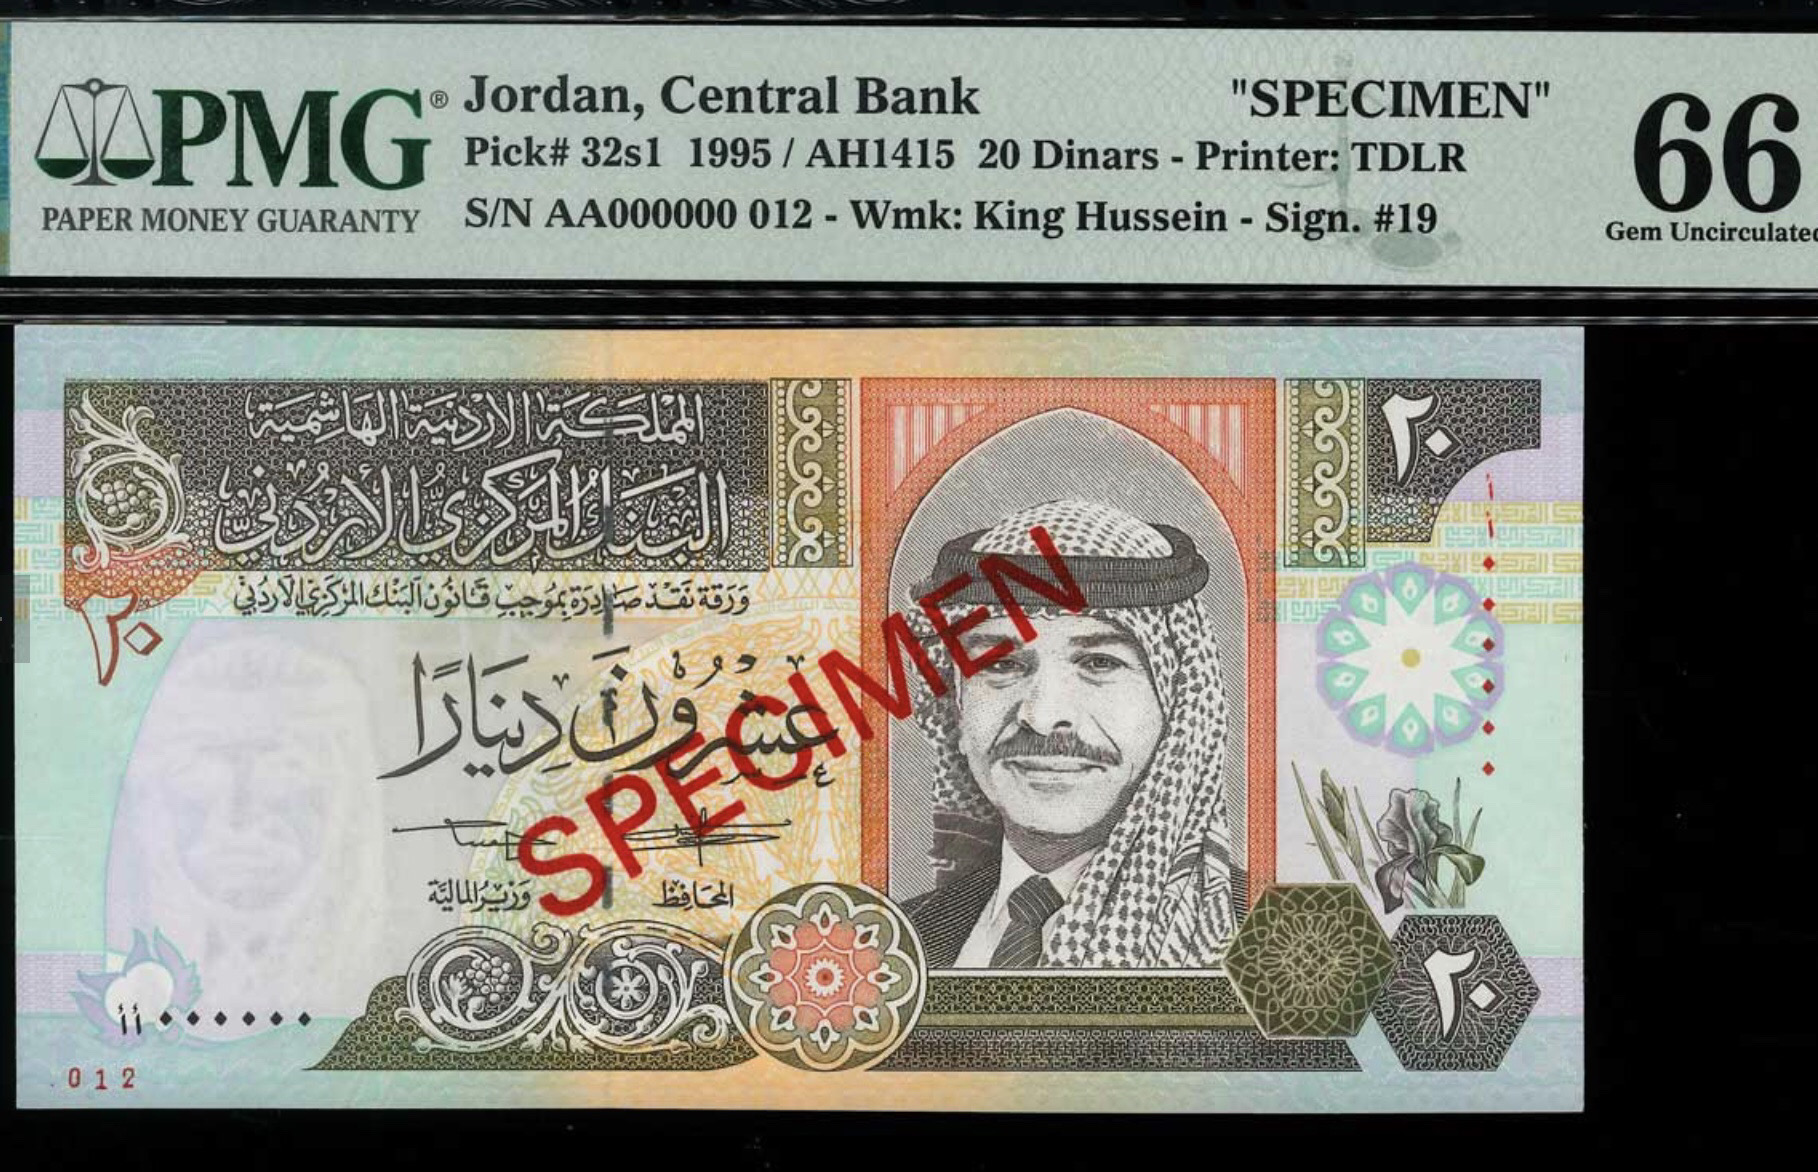 1995 Jordan 20 Dinars Specimen Banknote Pick 32s S/N AA000000 012 PMG 66 UNC